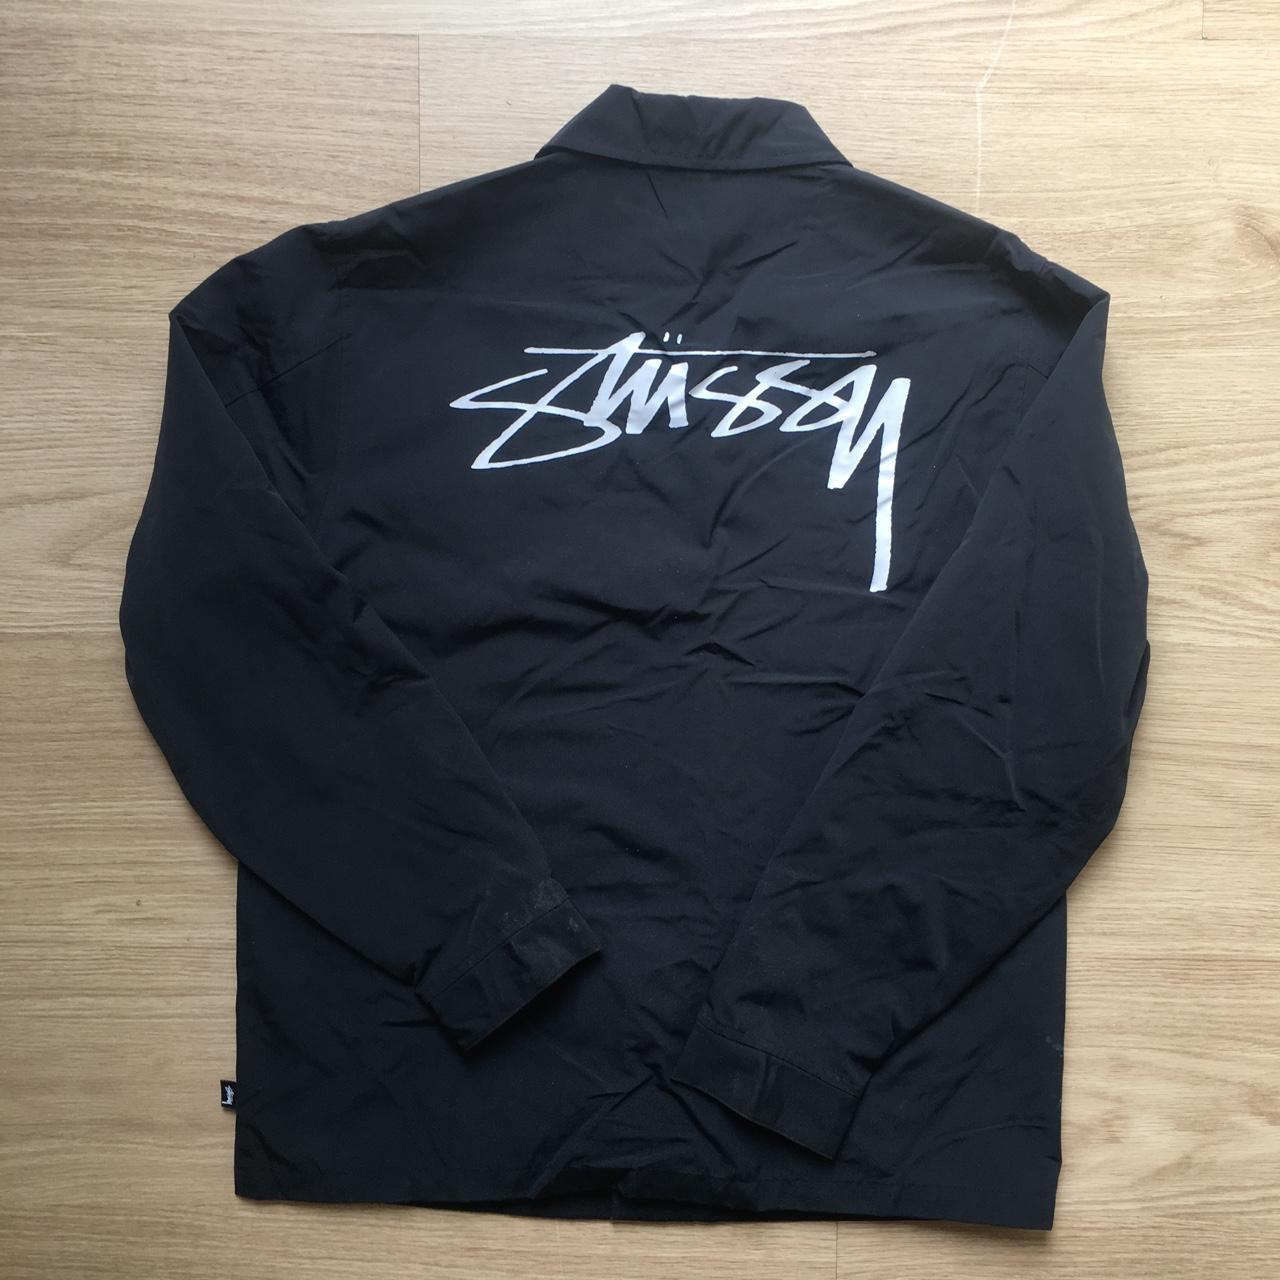 Stussy coach jacket Good condition Size S fits... - Depop